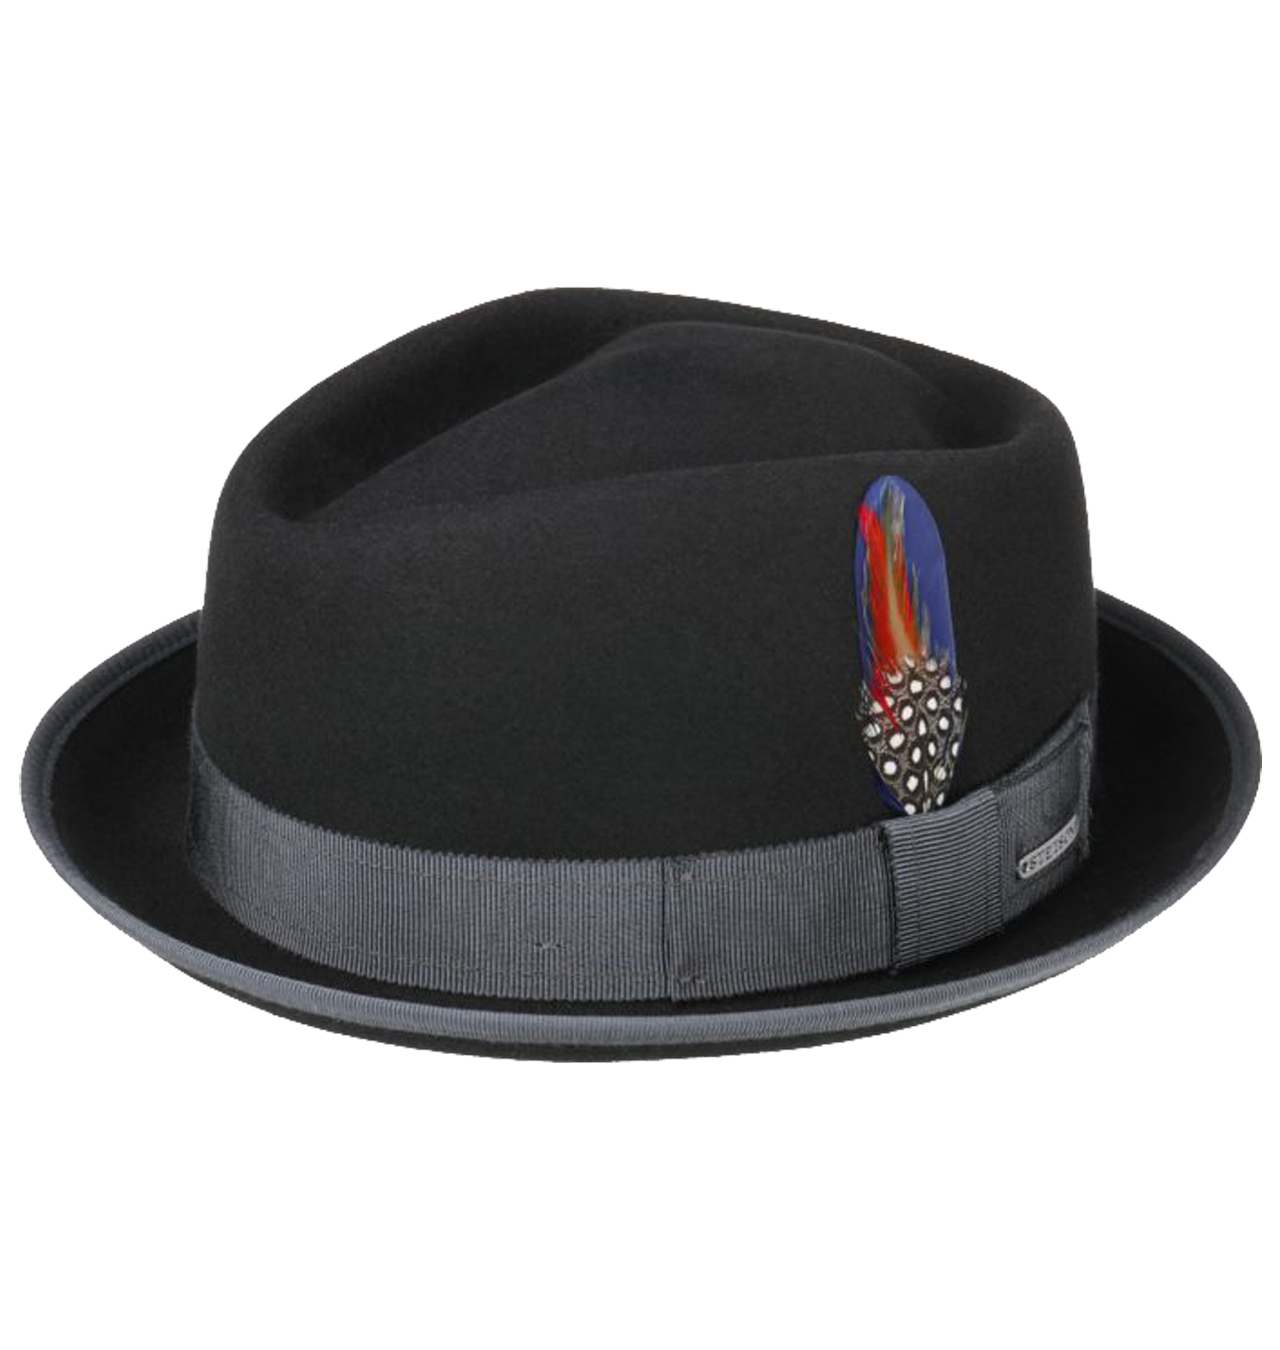 Stetson - Hulett Diamond Wool Hat With Cashmere - Black